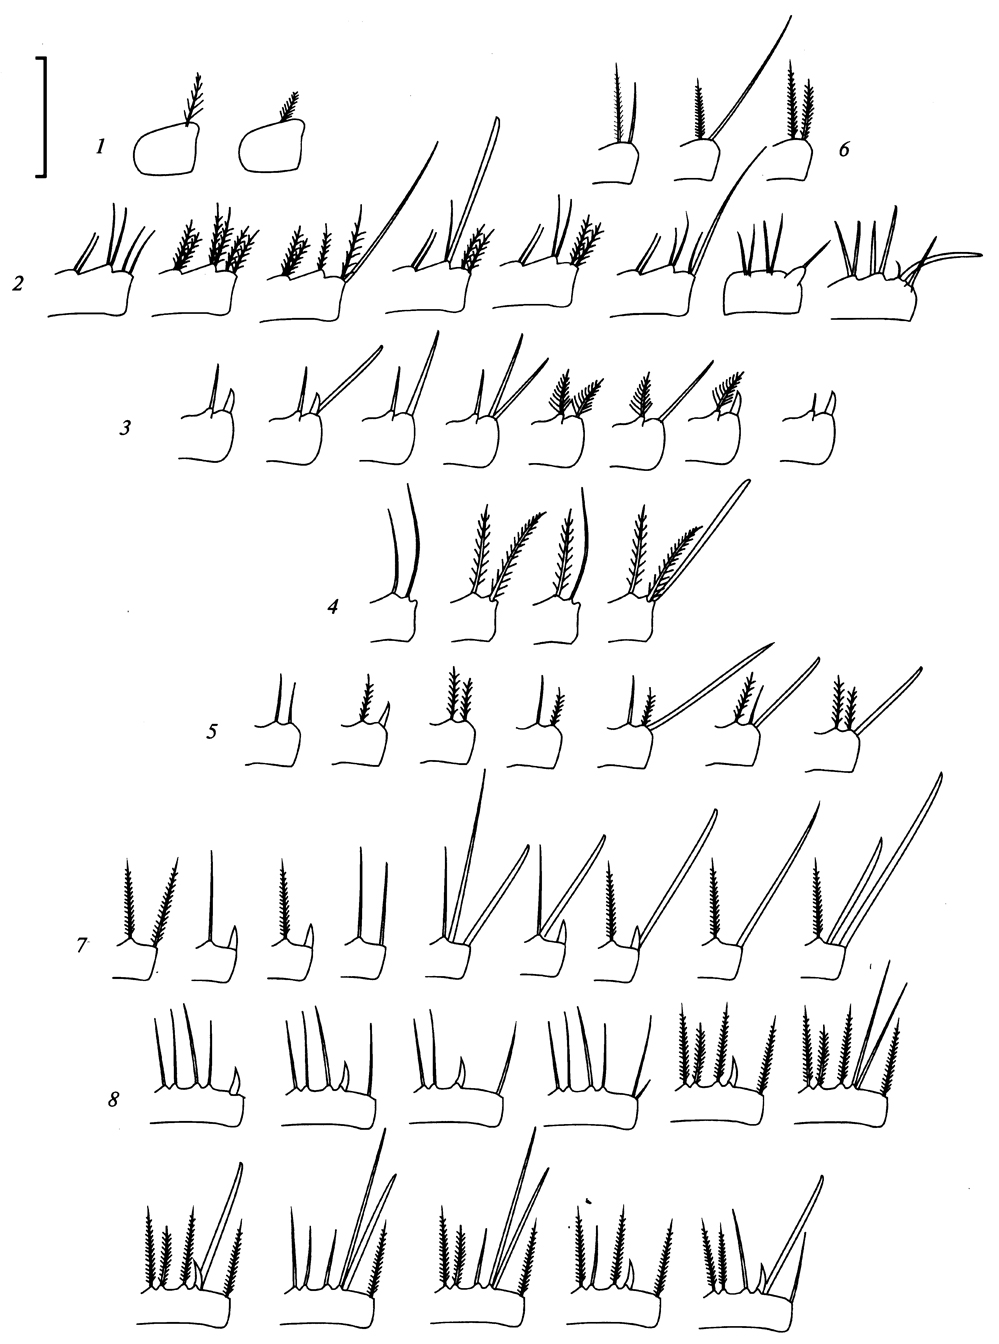 Species Racovitzanus antarcticus - Plate 14 of morphological figures